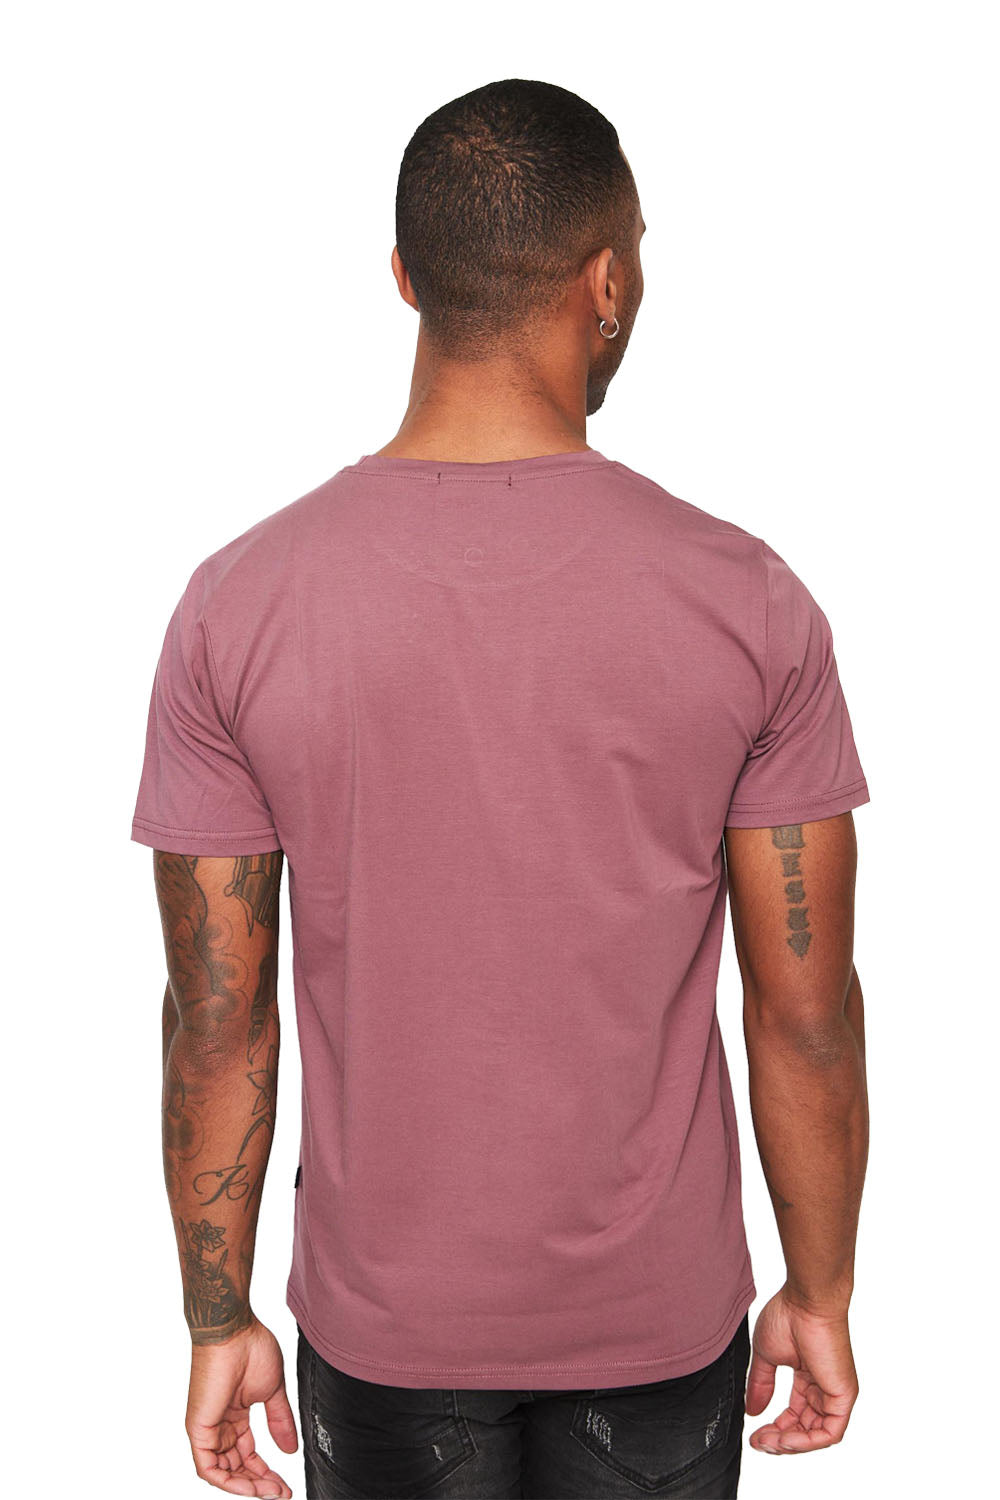 BARABAS Men's Basic Solid Color Crew-neck T-shirts ST933 dark purple